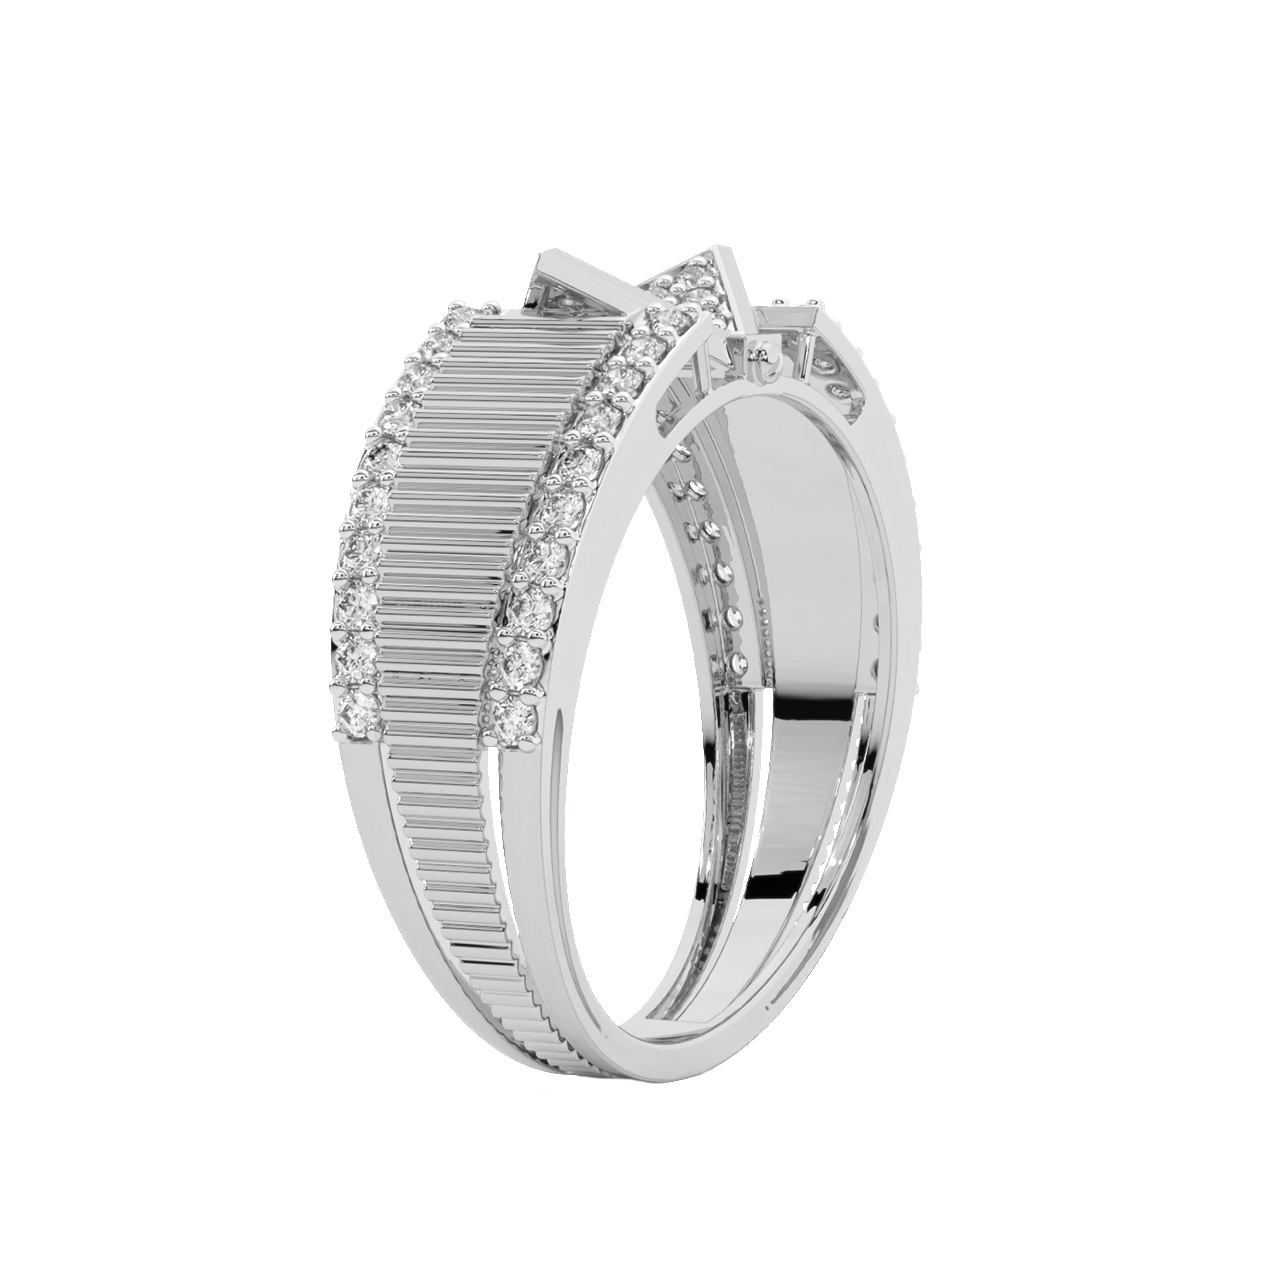 Ethan Round Diamond Engagement Ring